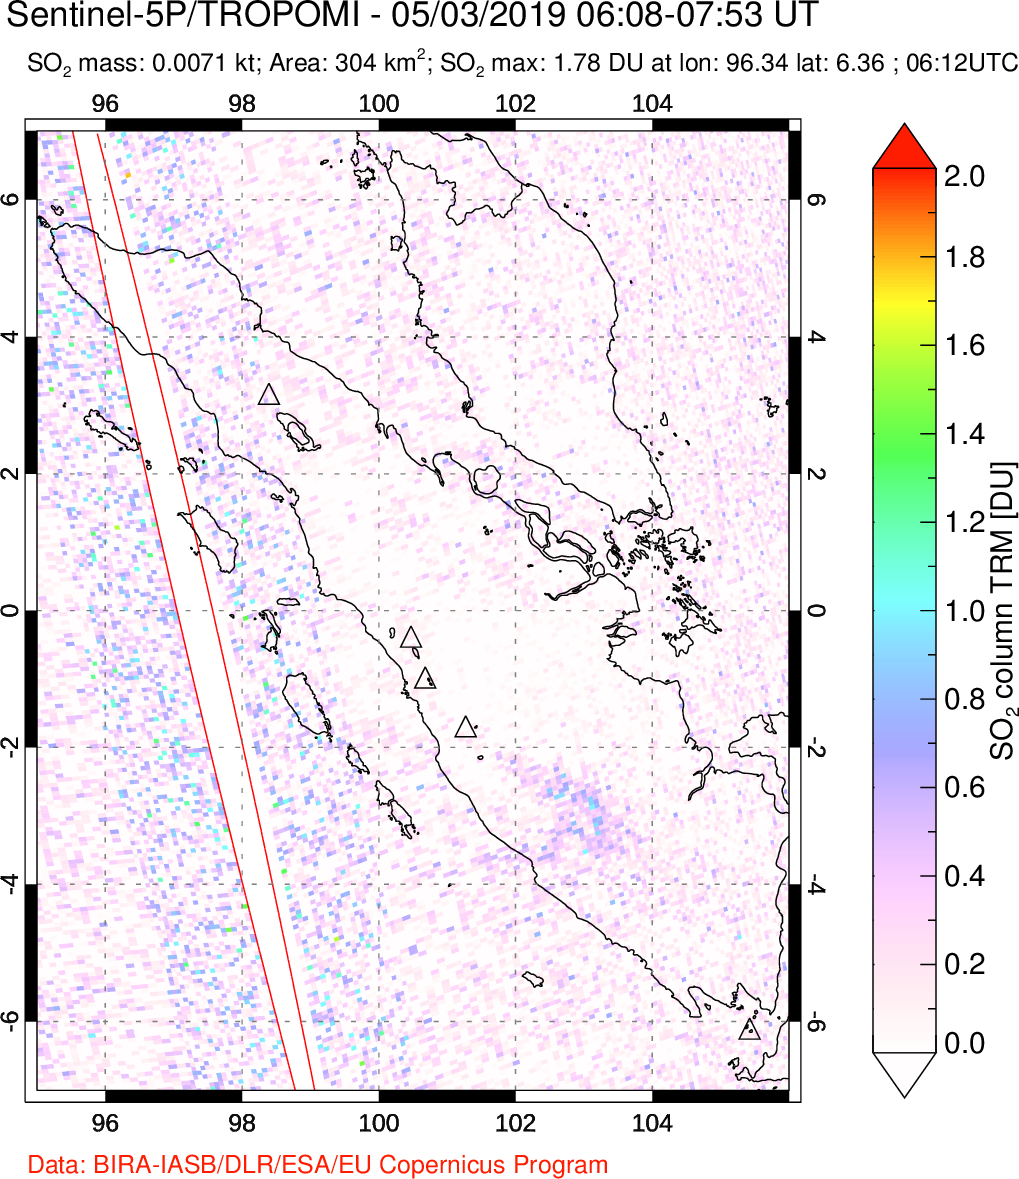 A sulfur dioxide image over Sumatra, Indonesia on May 03, 2019.